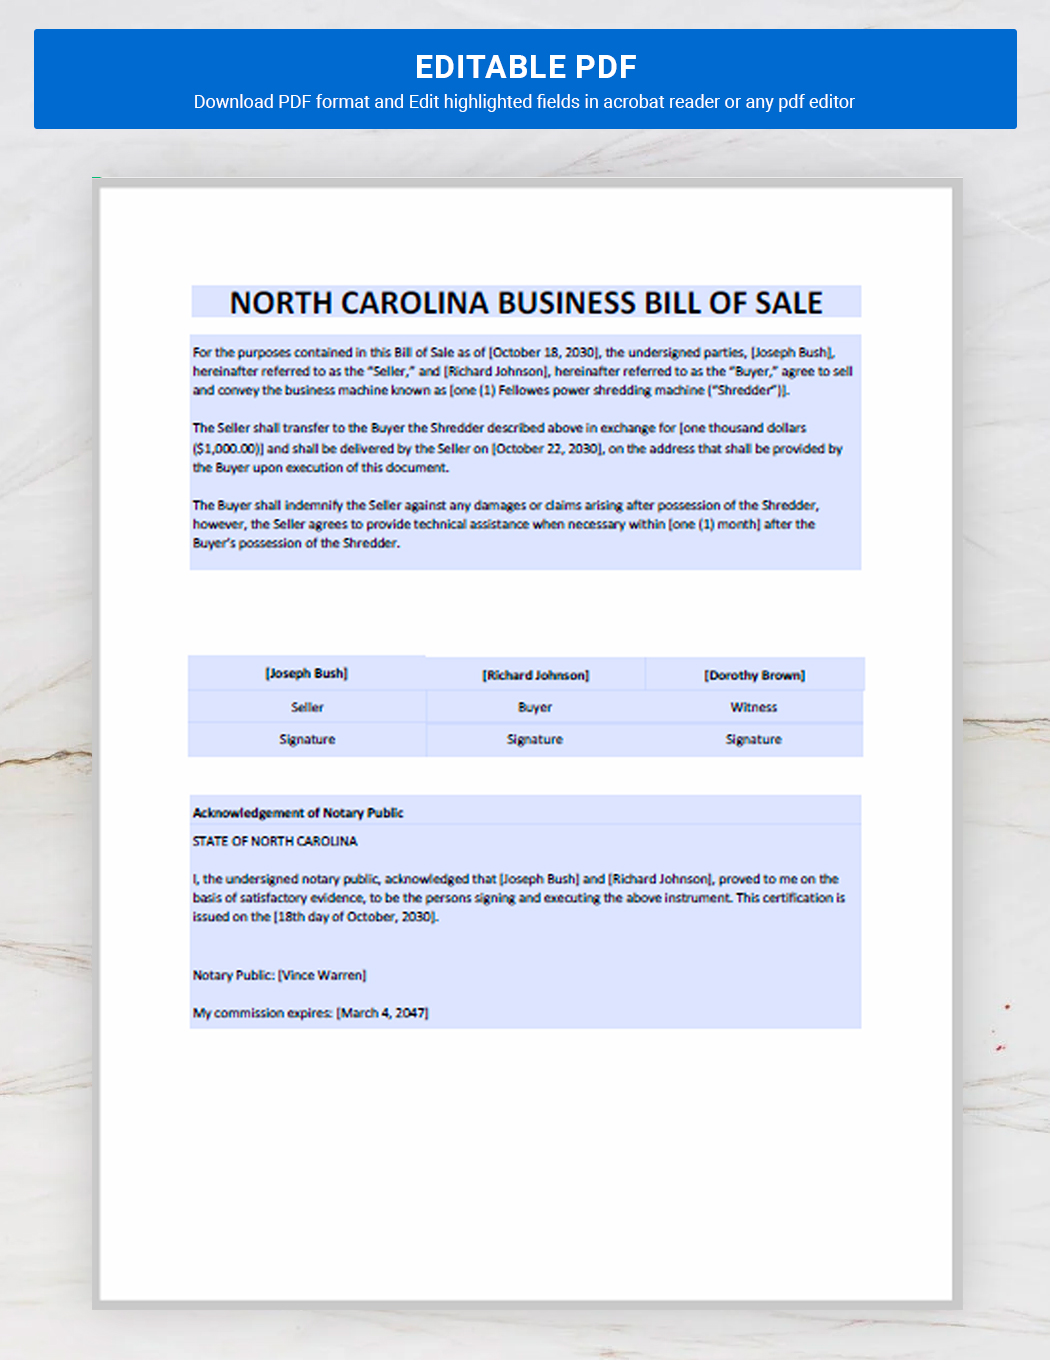 North Carolina Business Bill of Sale Template